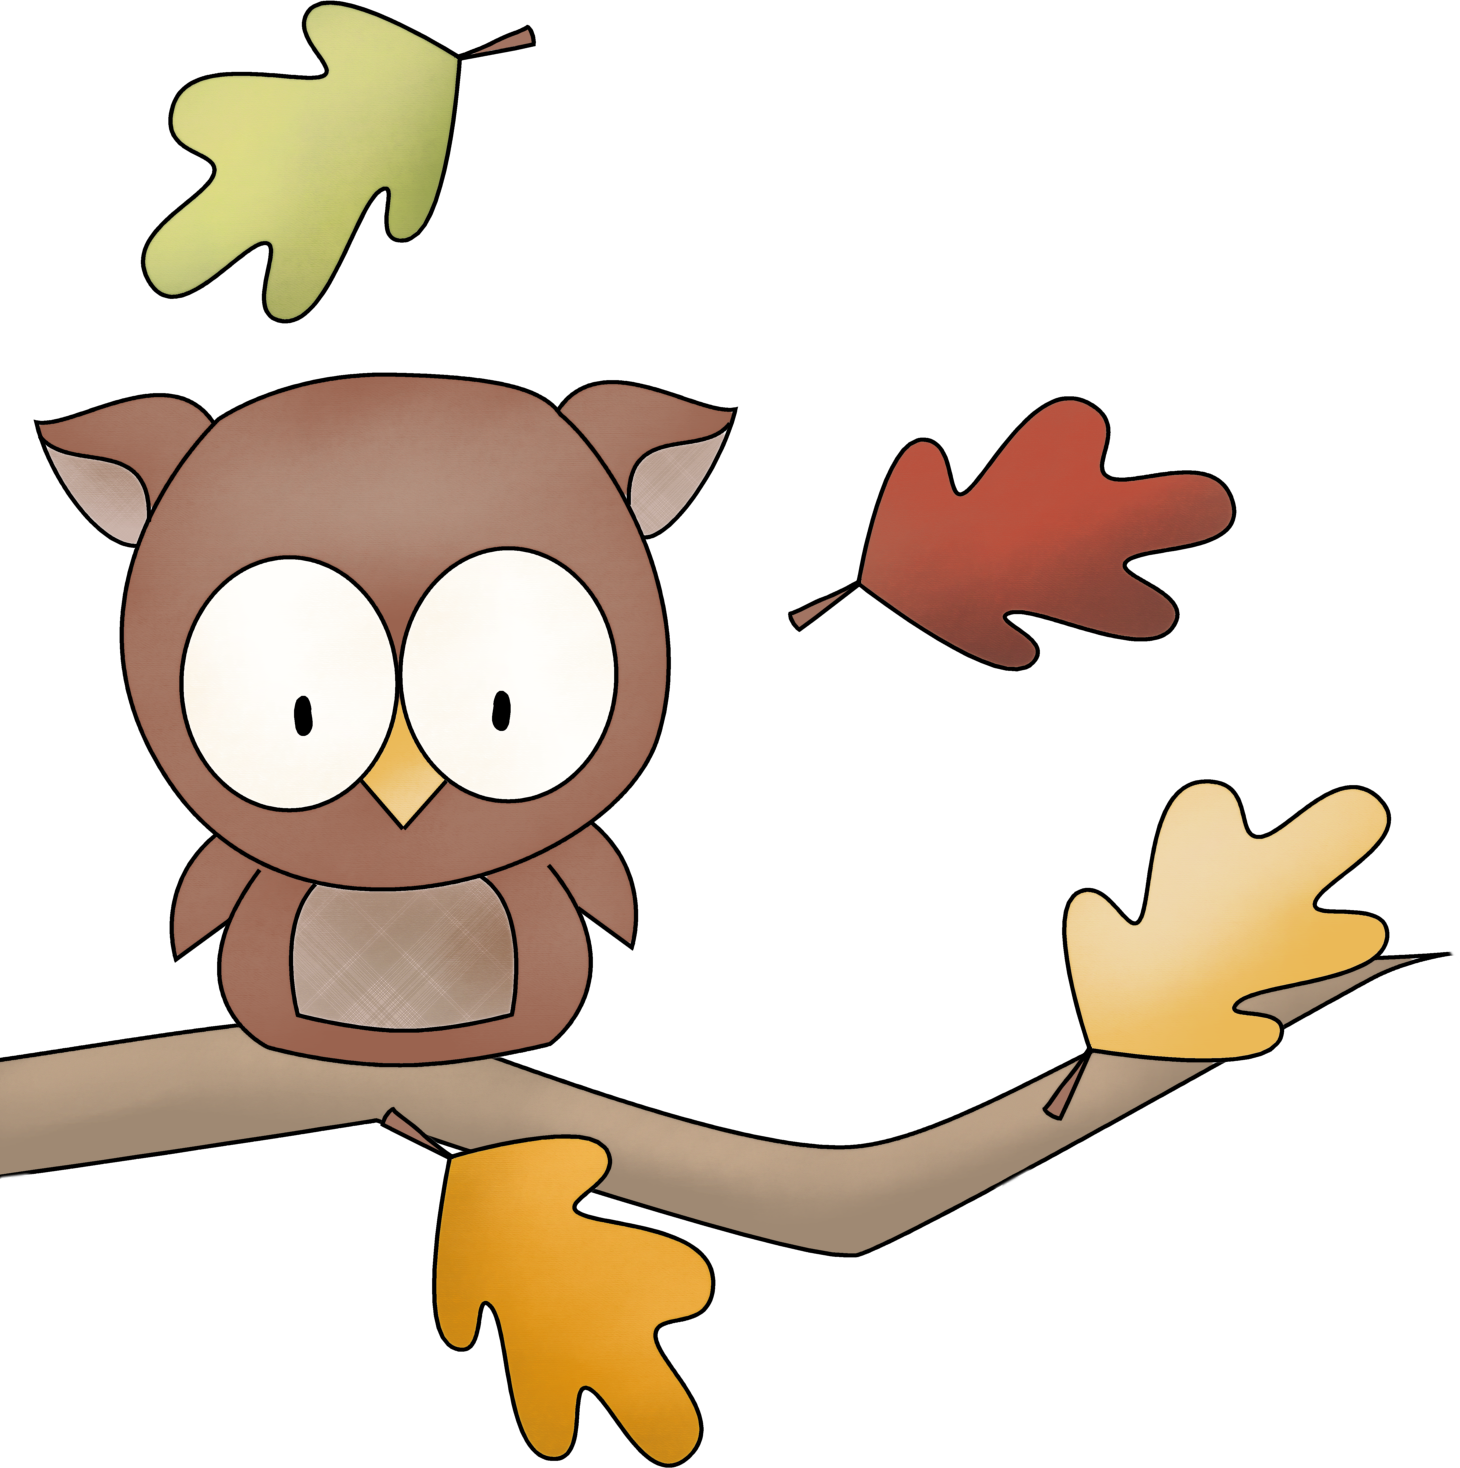 Owl clipart november, Owl november Transparent FREE for ...